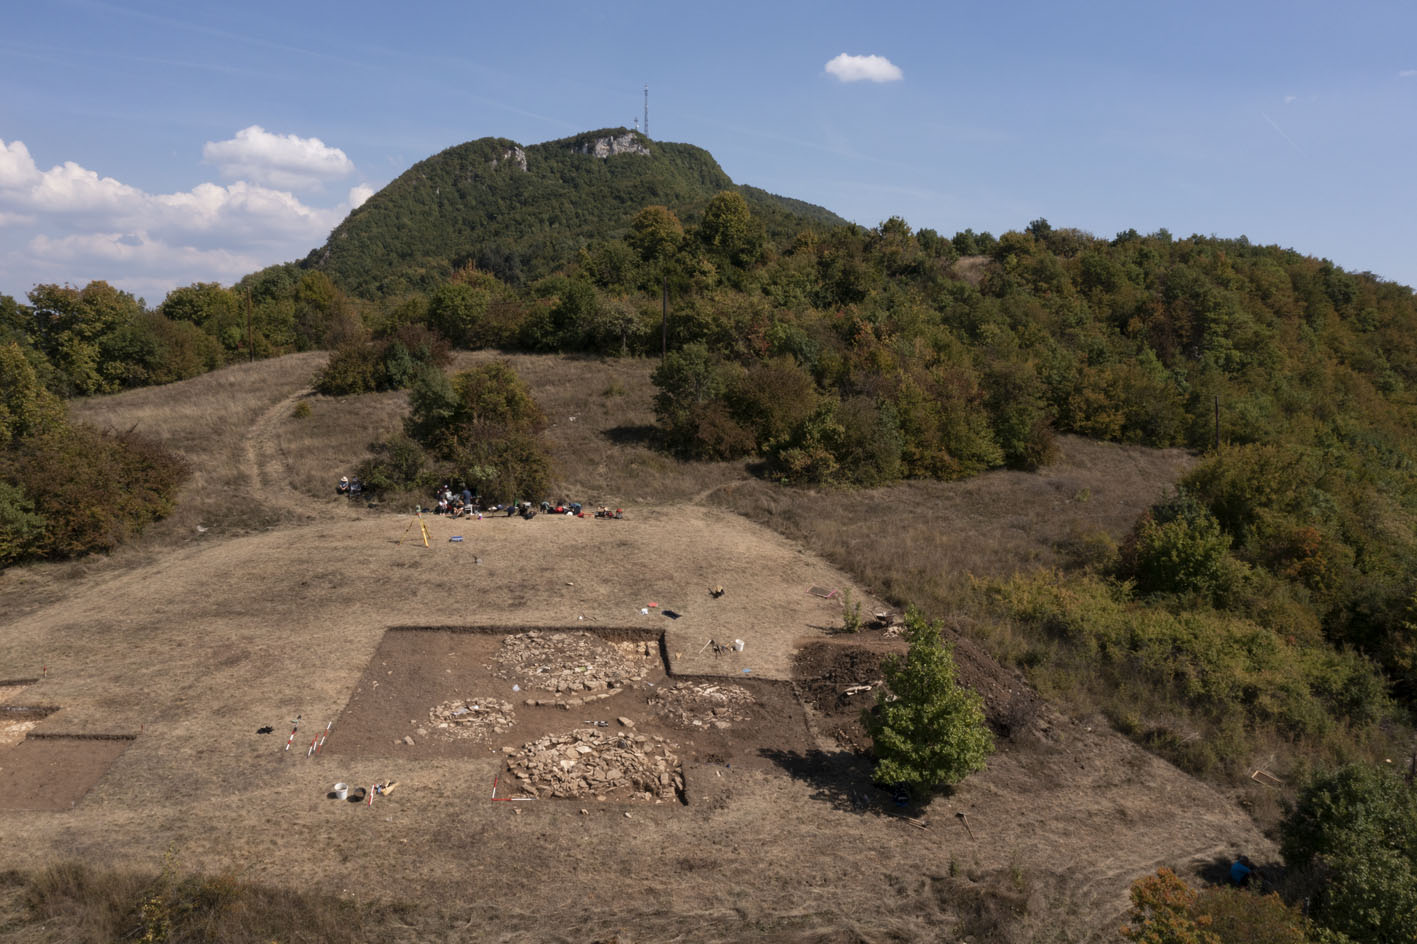 New fibula types found in prehistoric graves in Bosnia